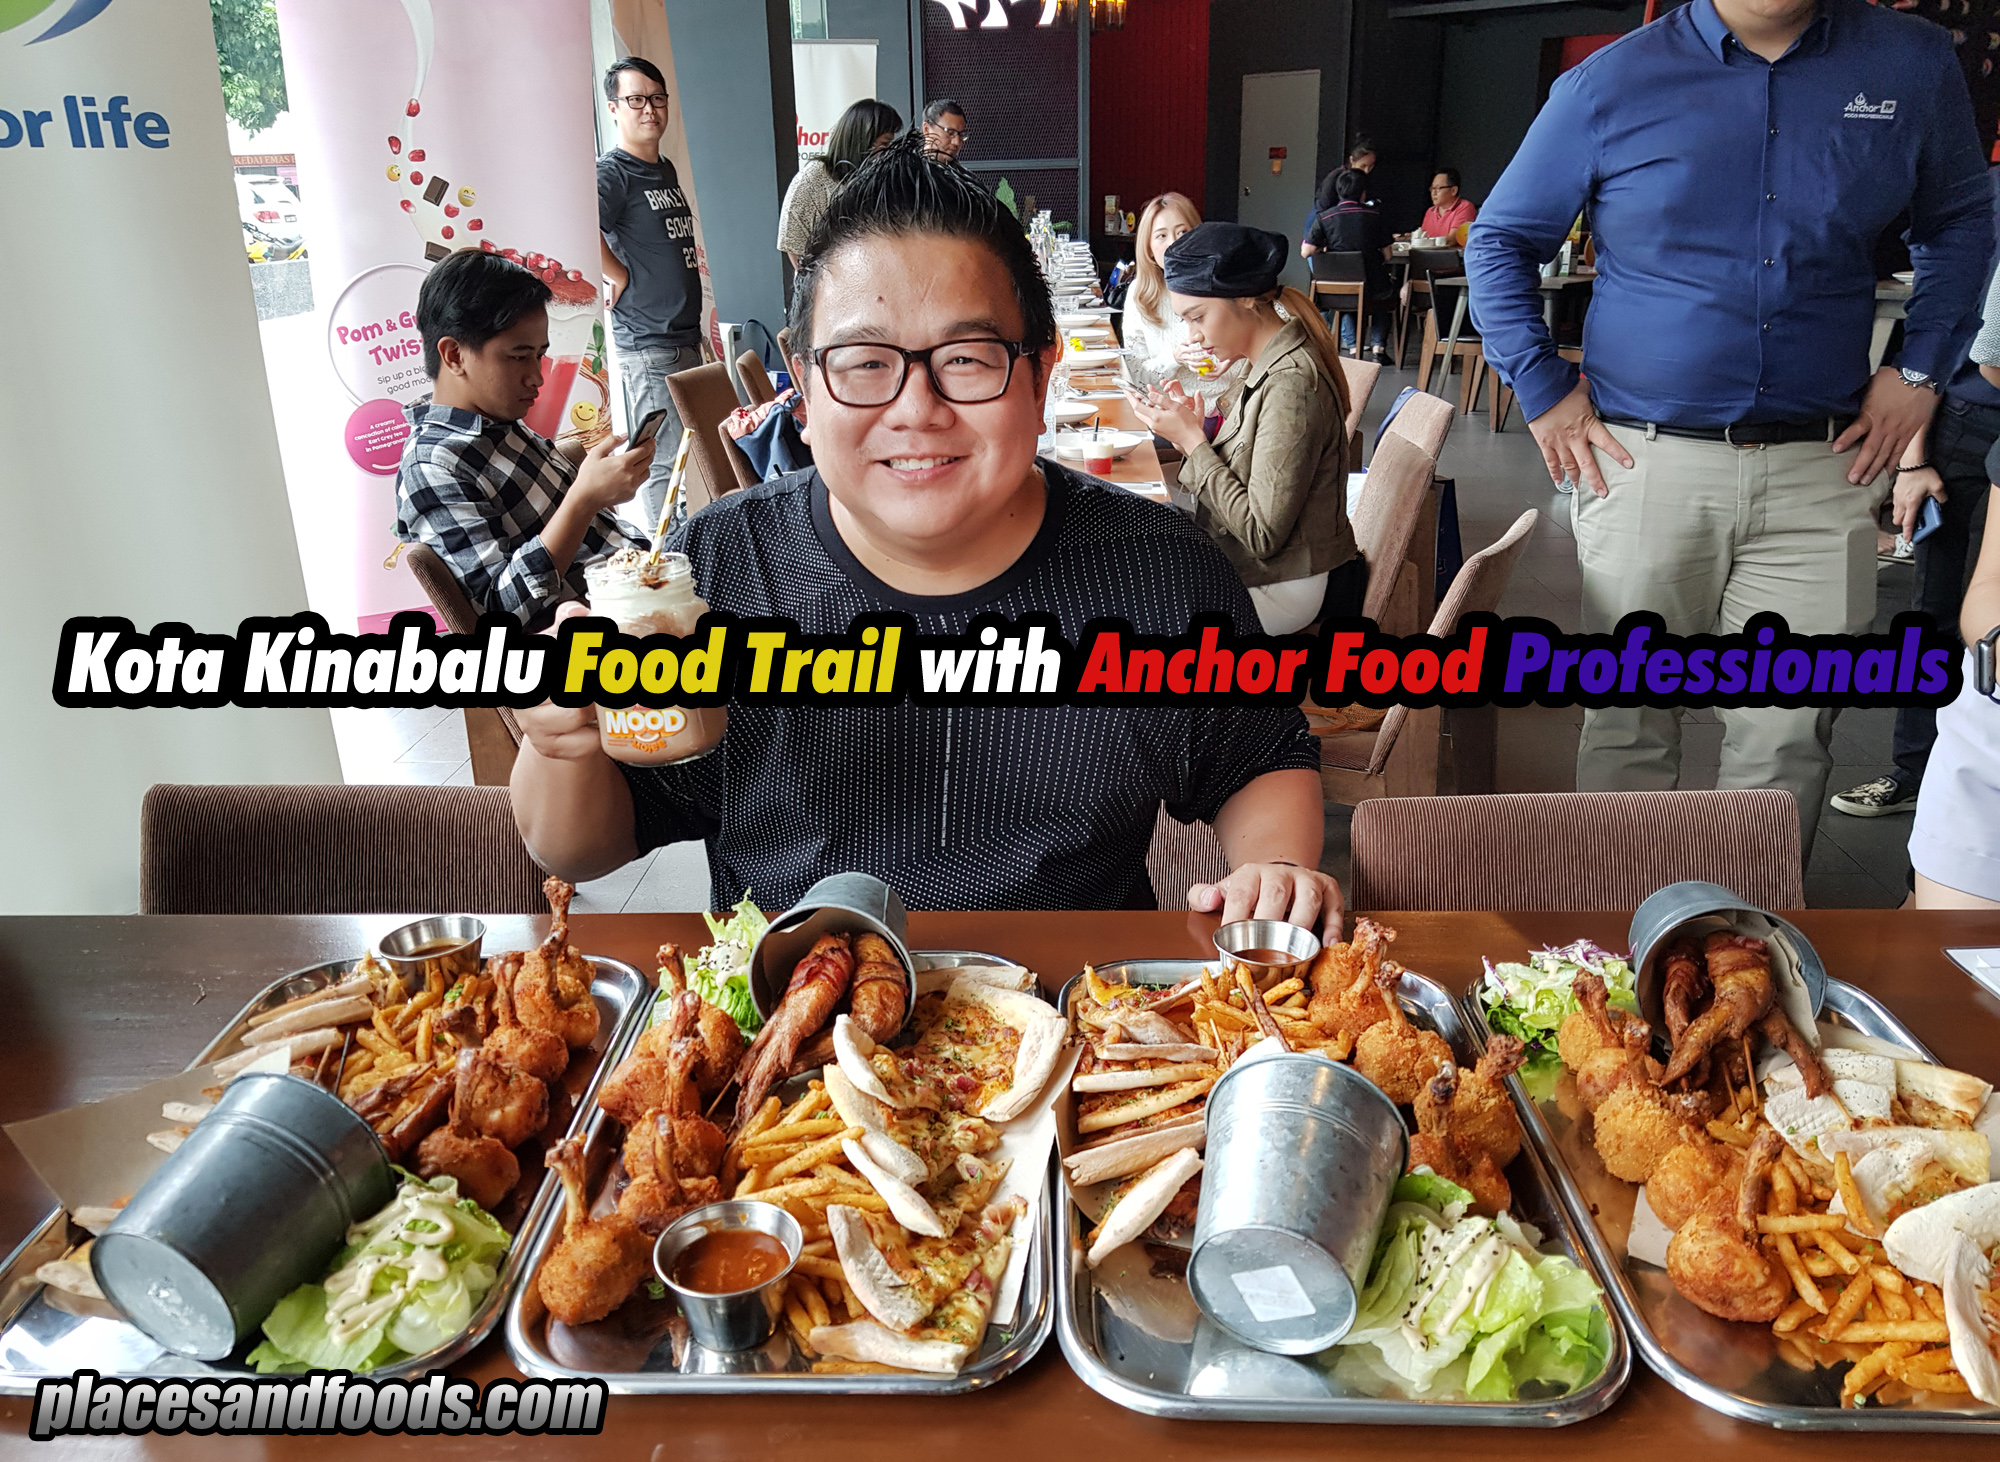 Kota Kinabalu Food Trail with Anchor Food Professionals